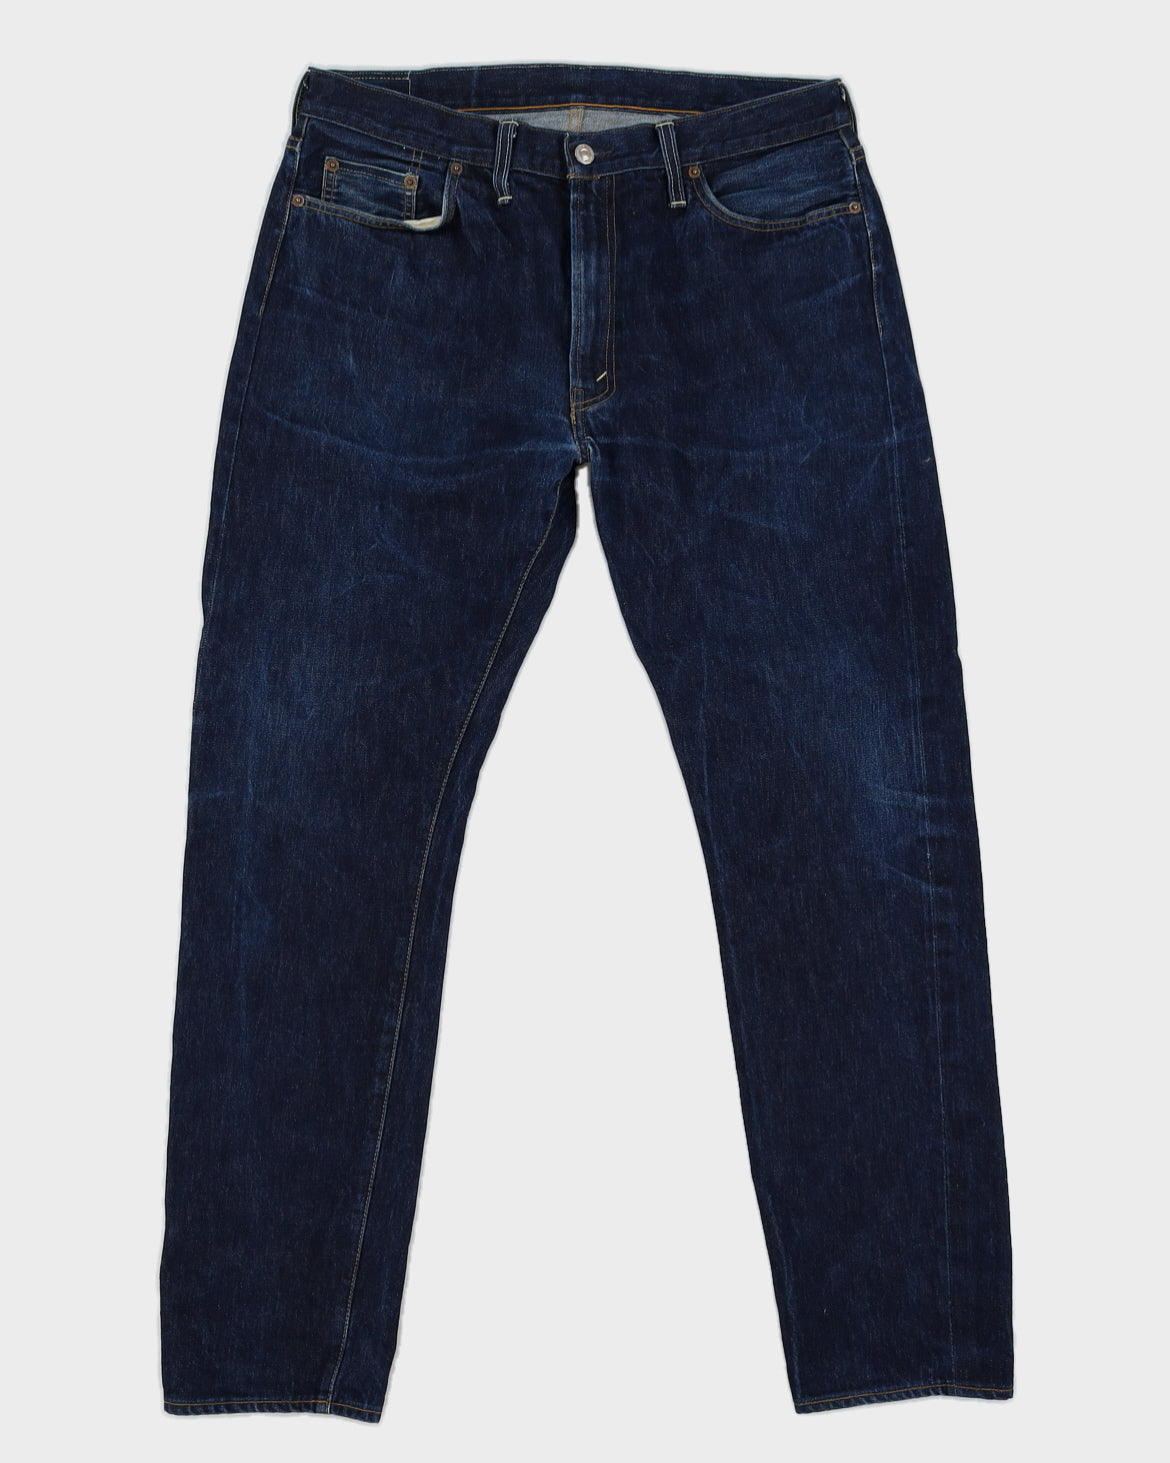 Levi's 501 Big E Repro Selvedge Blue Jeans - W35 L32